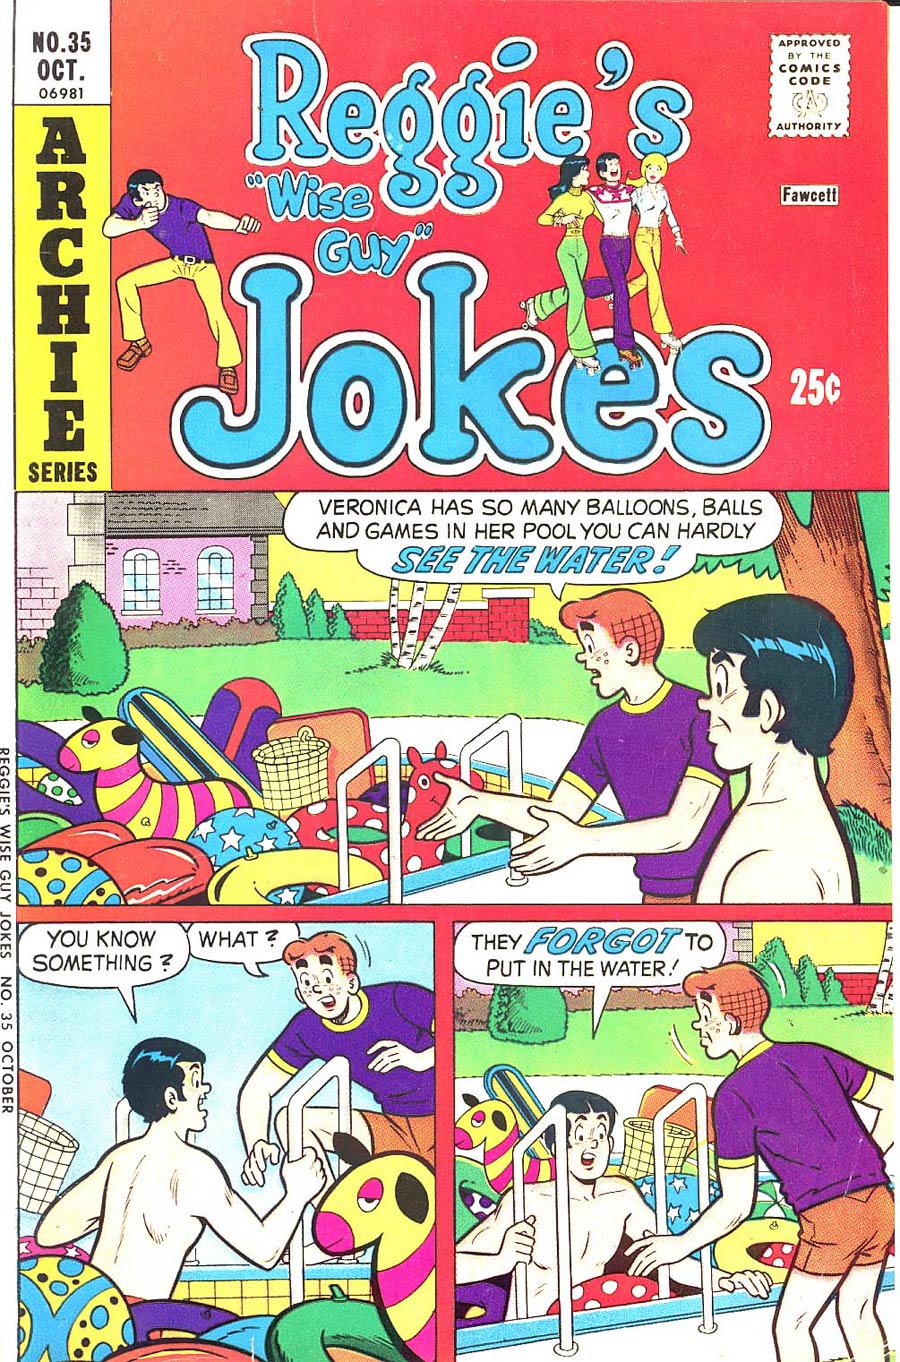 Reggies Wise Guy Jokes #35